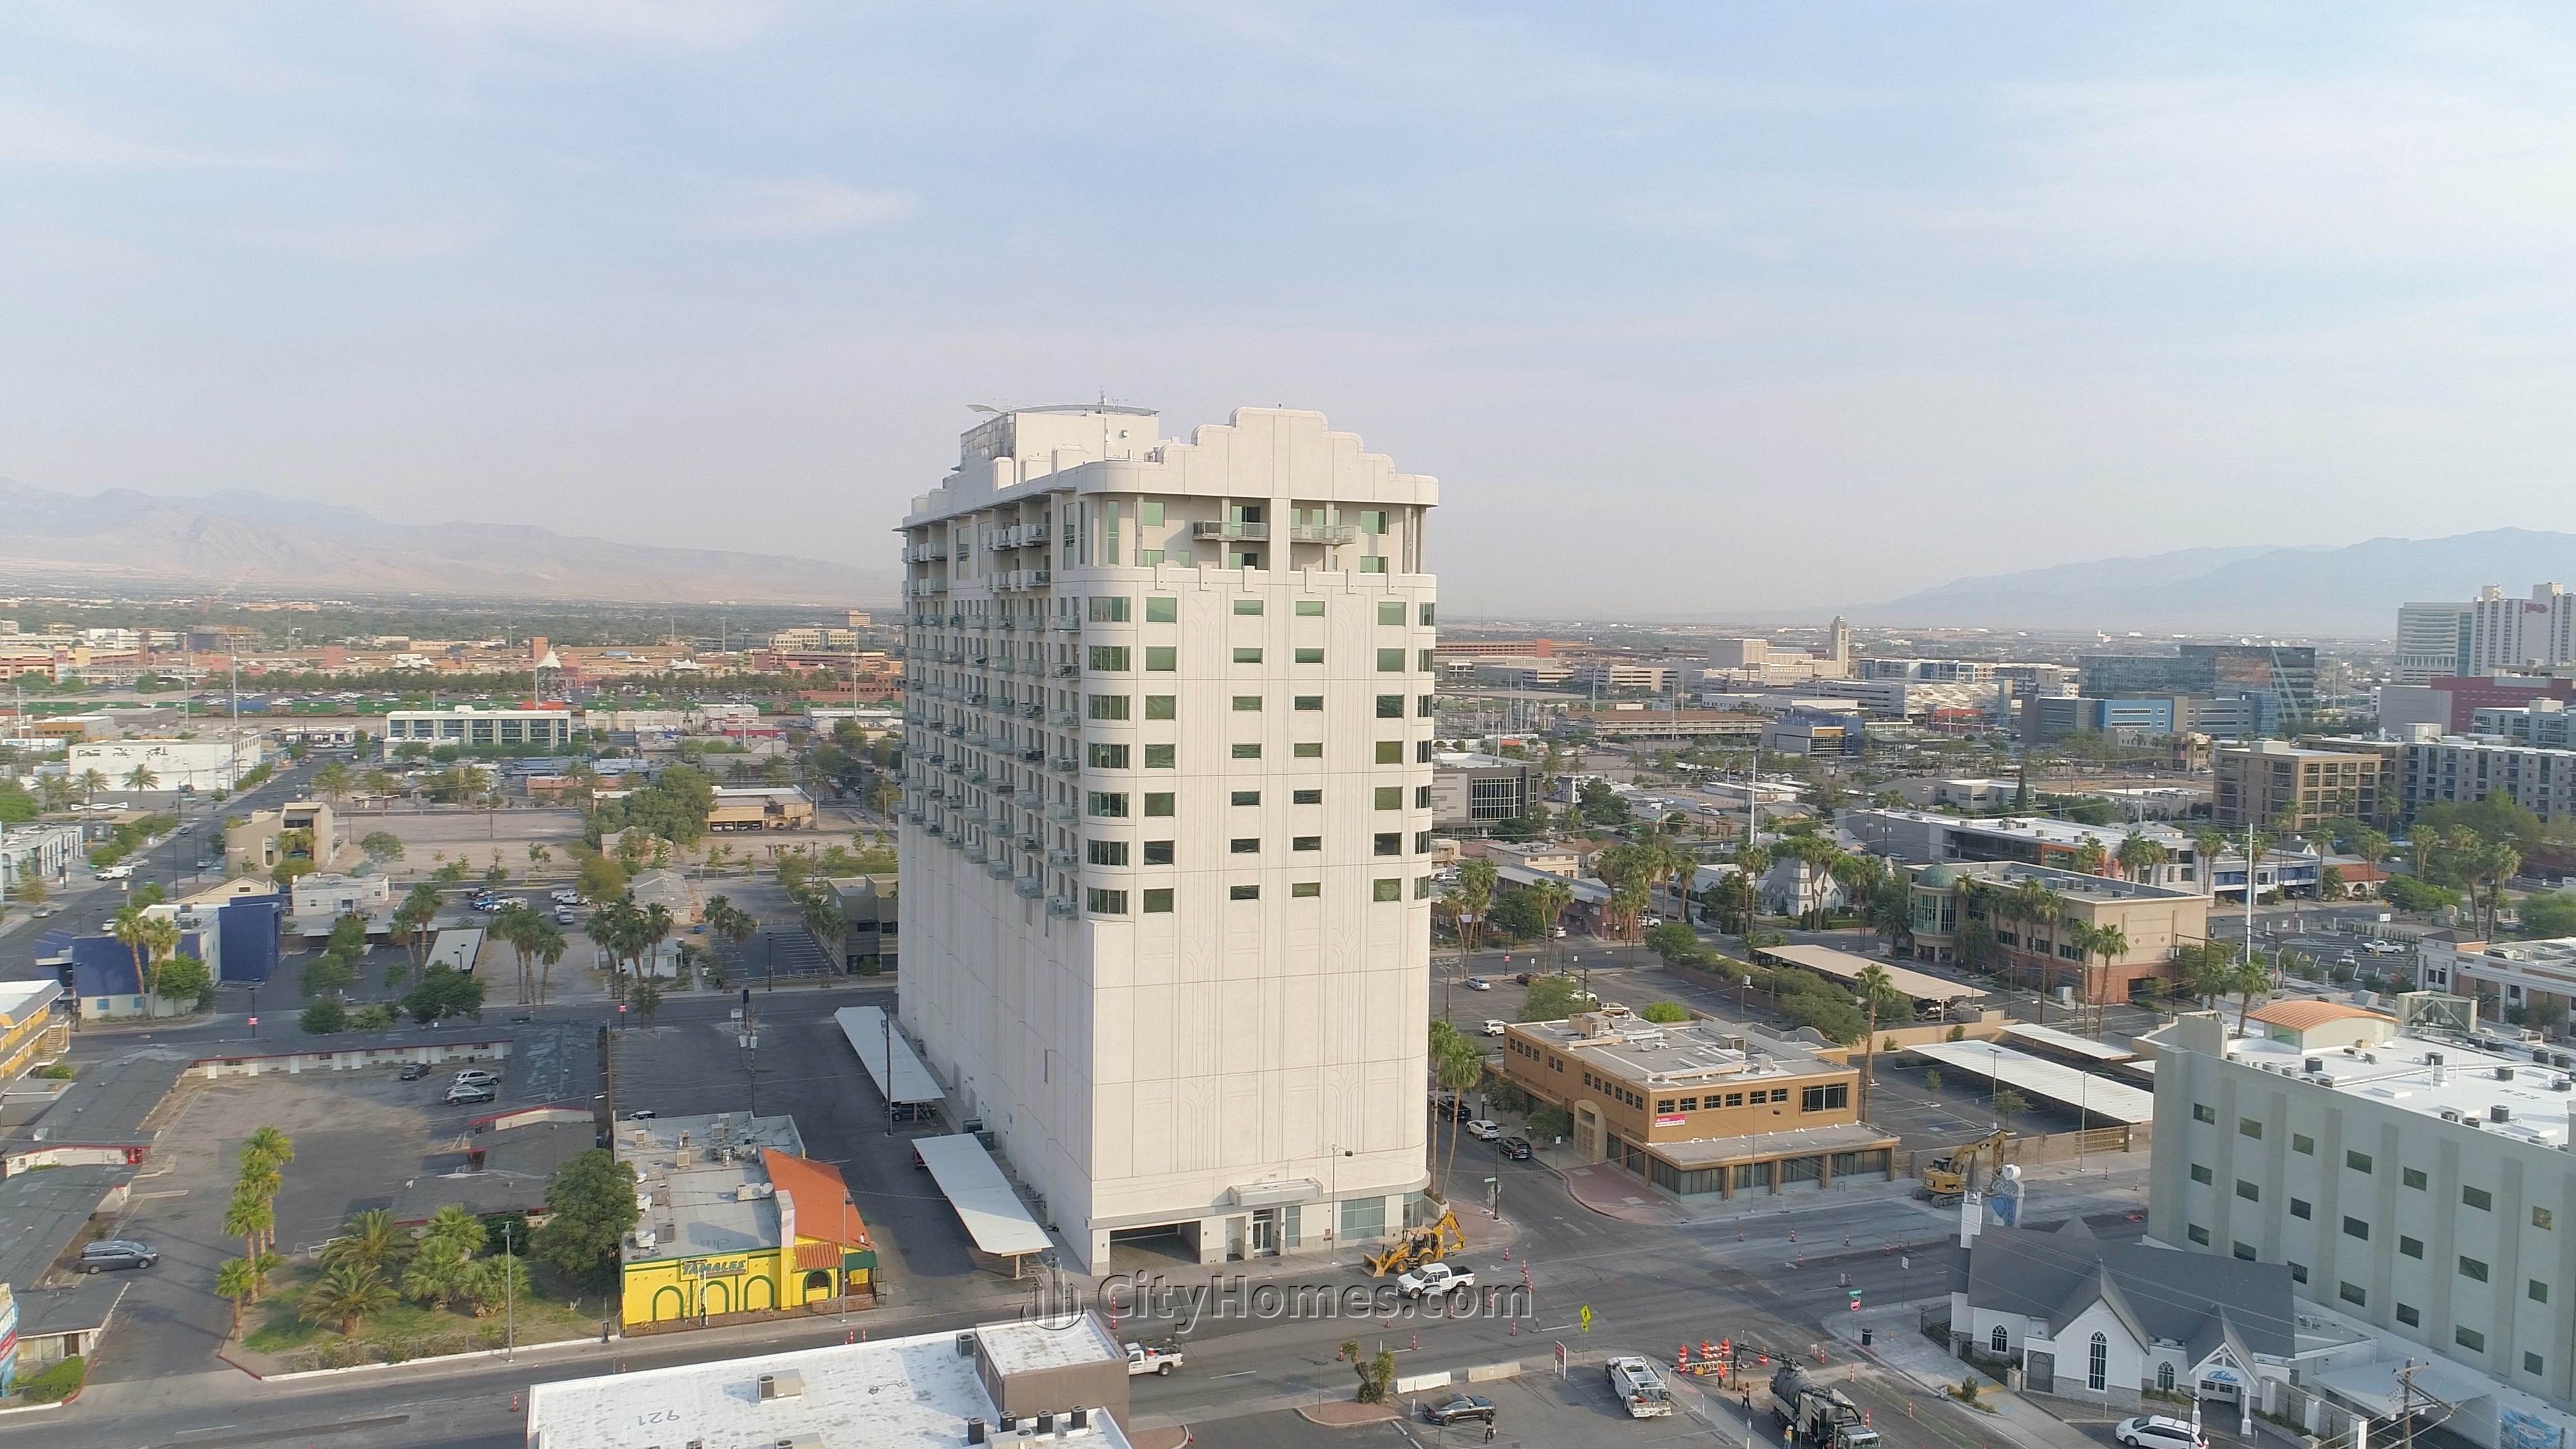 2. Soho Lofts building at 900 S Las Vegas Blvd, Las Vegas, NV 89101